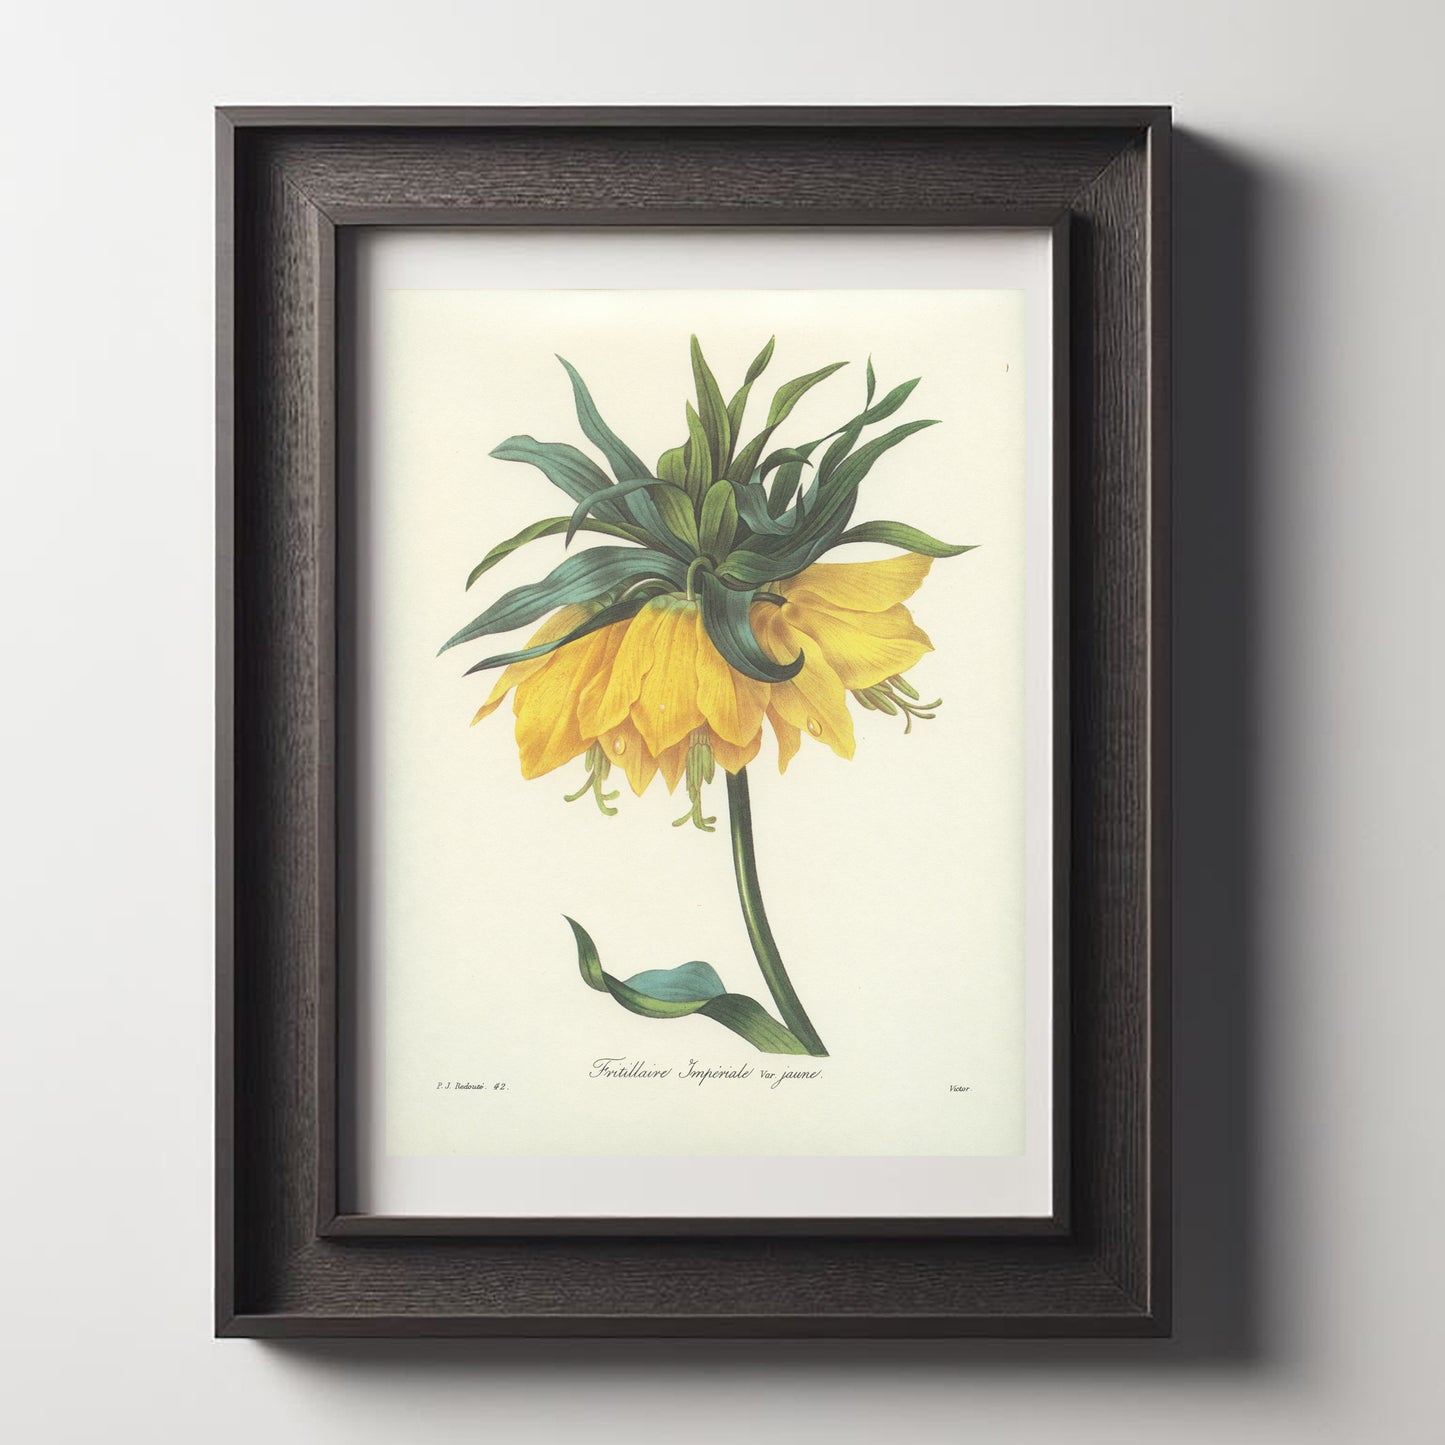 1986 Vintage Yellow Fritillaria Imperialis Botanical Print by Redouté